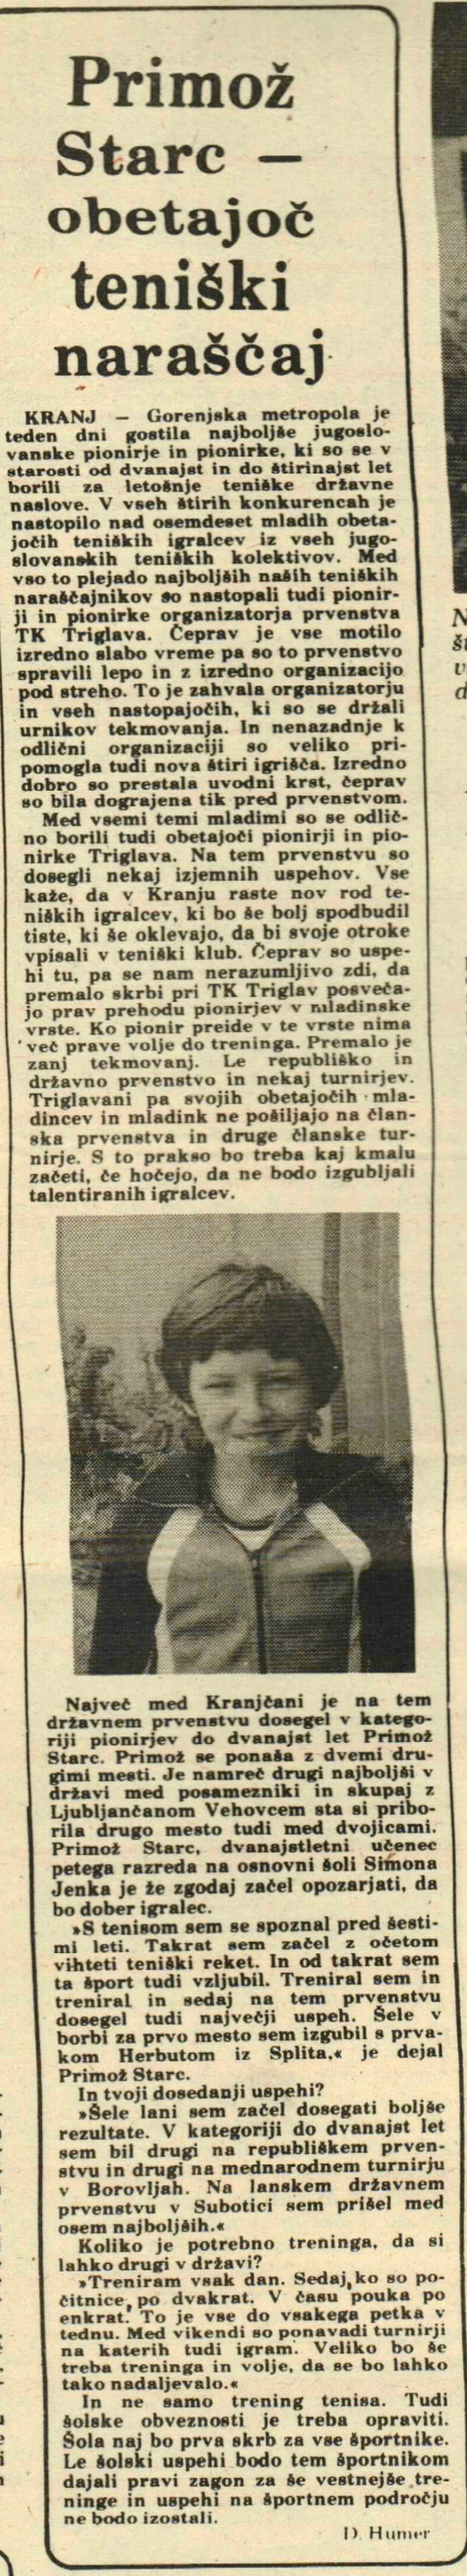 1980.7.15_Primoz_Starc-obetajoc_teniski_narascaj_GG.JPG